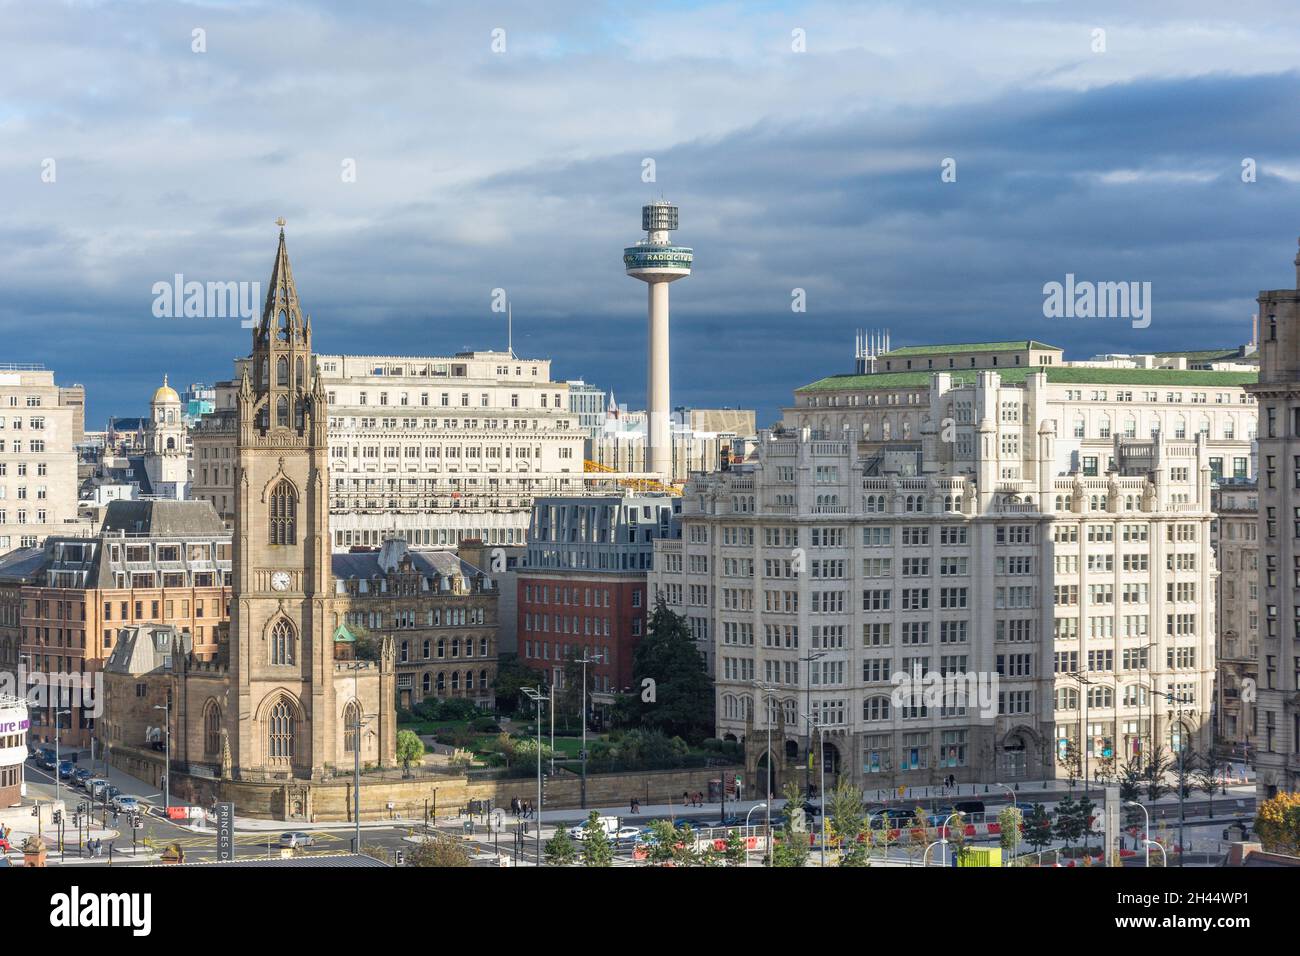 City Centre from Princes Dock, Pier Head, Liverpool, Merseyside, England, United Kingdom Stock Photo